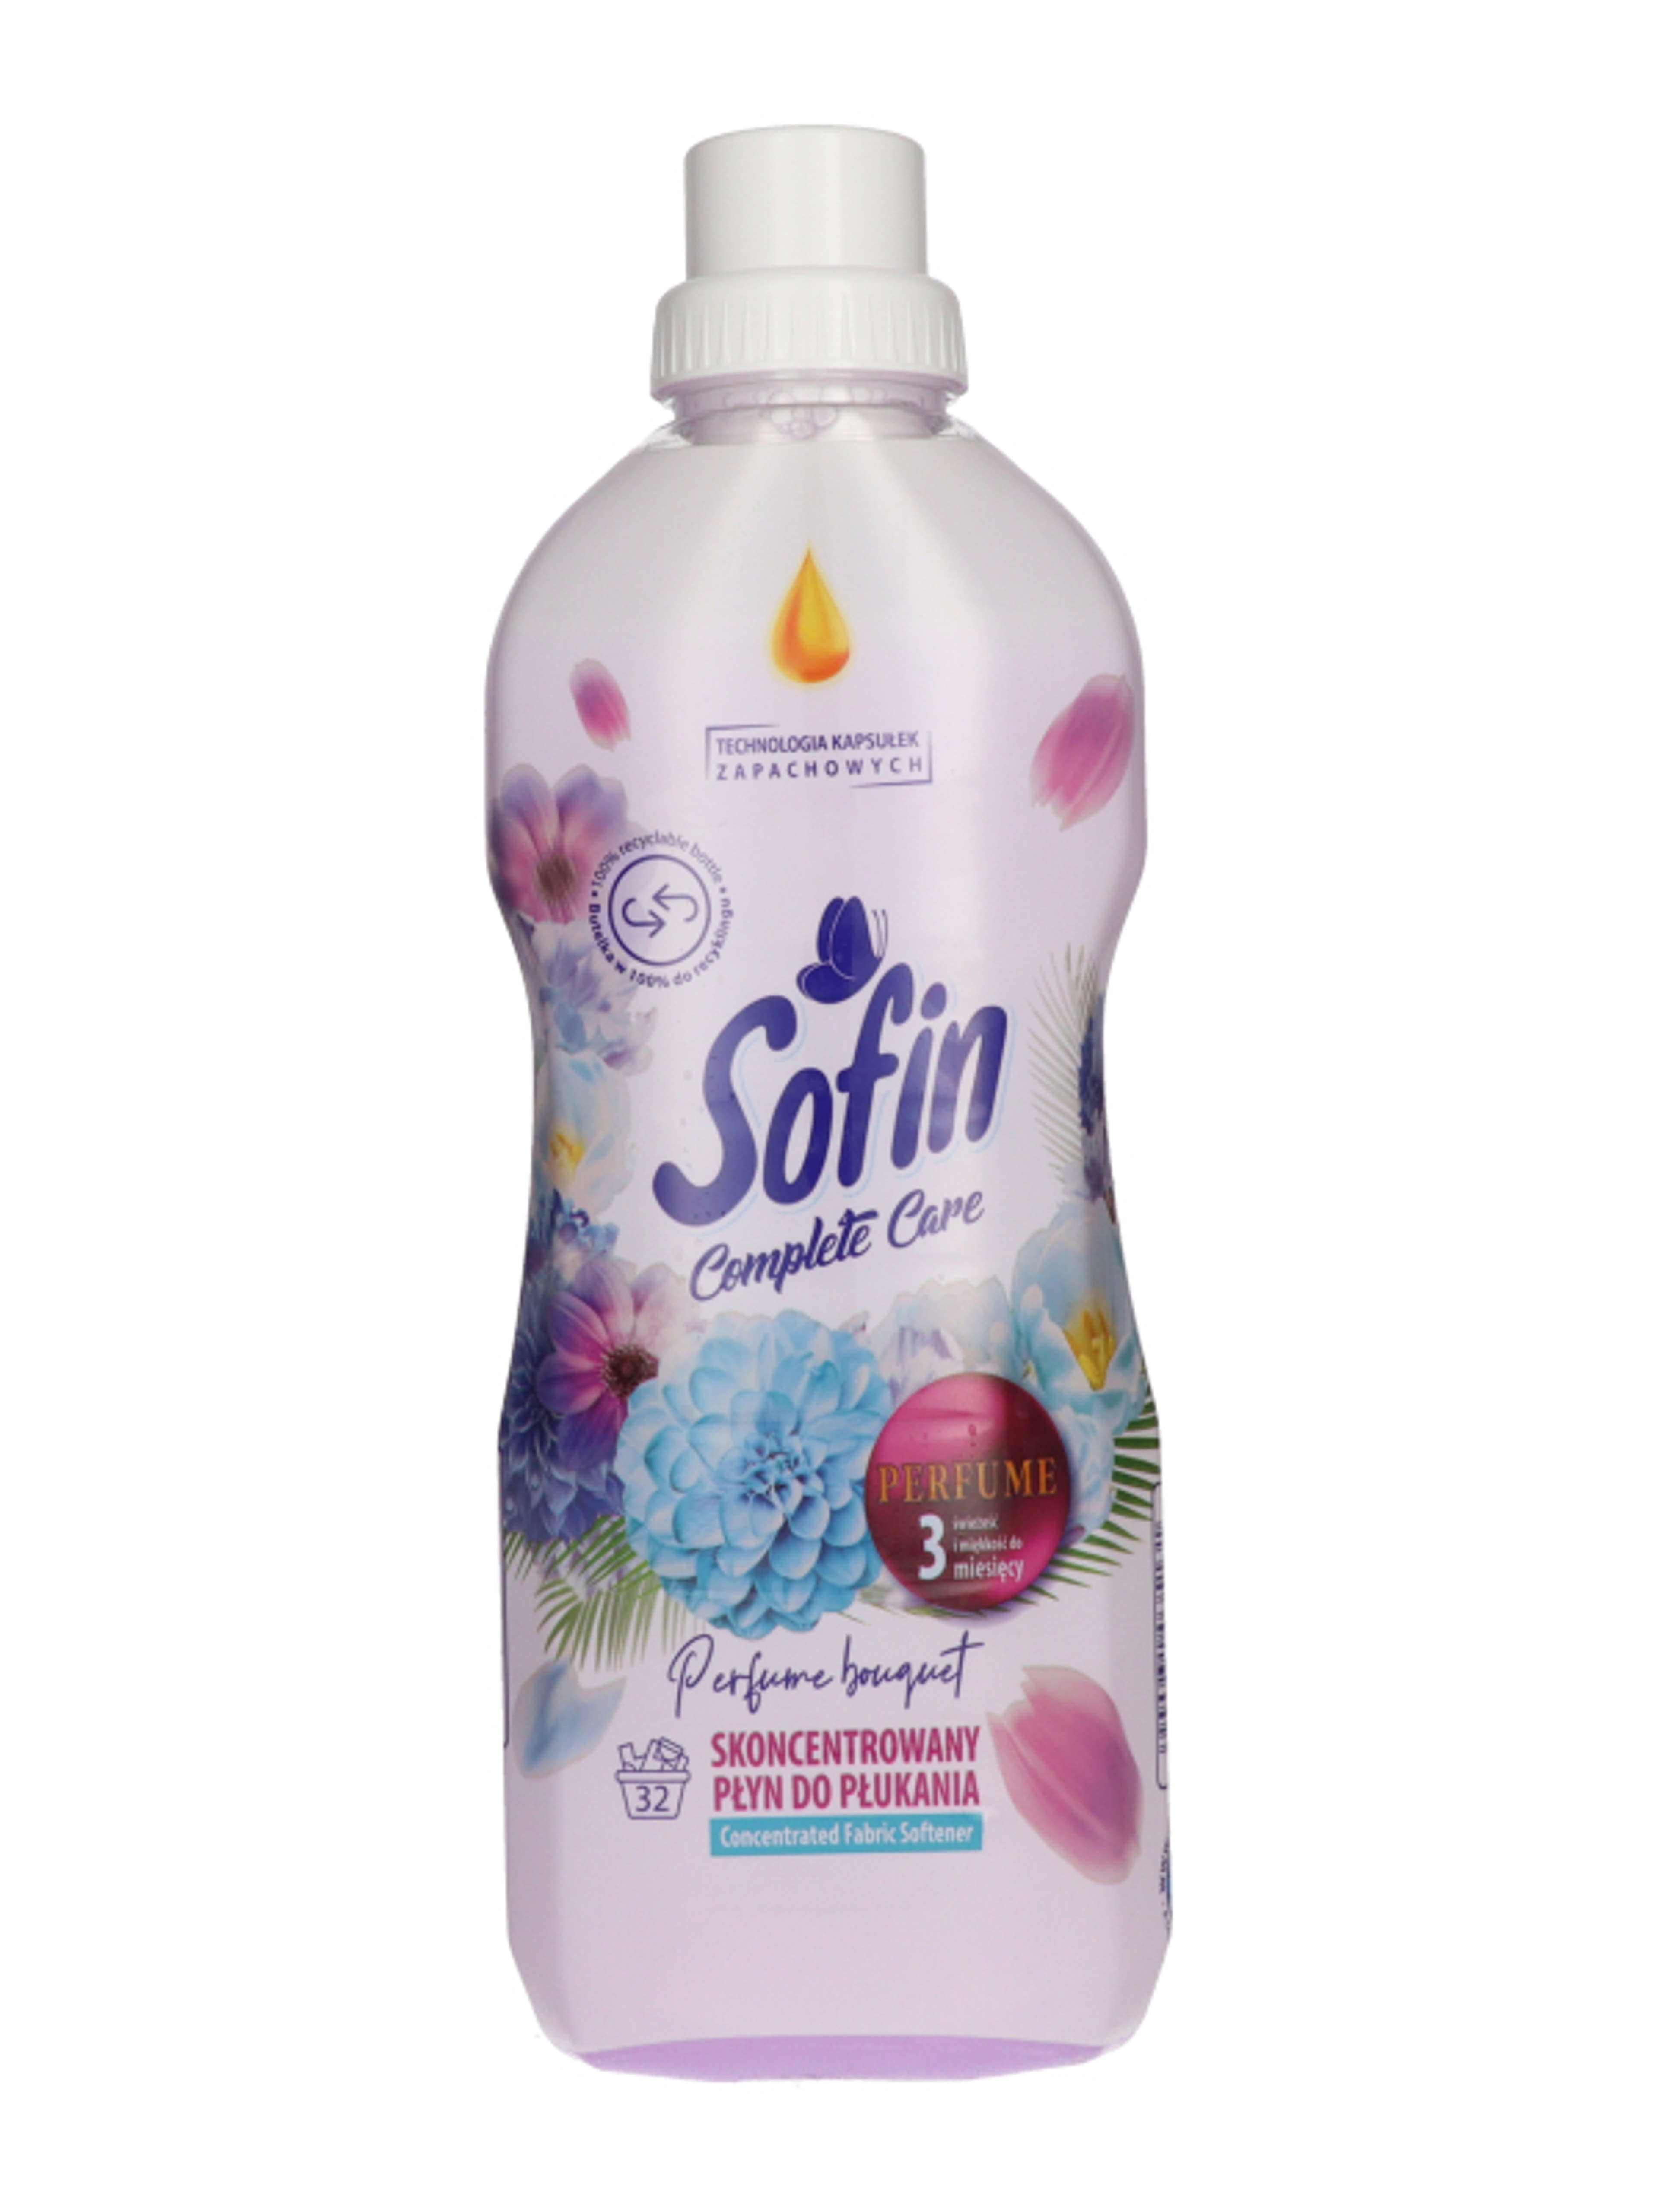 Sofin Complete Care&Perfume Bouquet öblítő - 800 ml